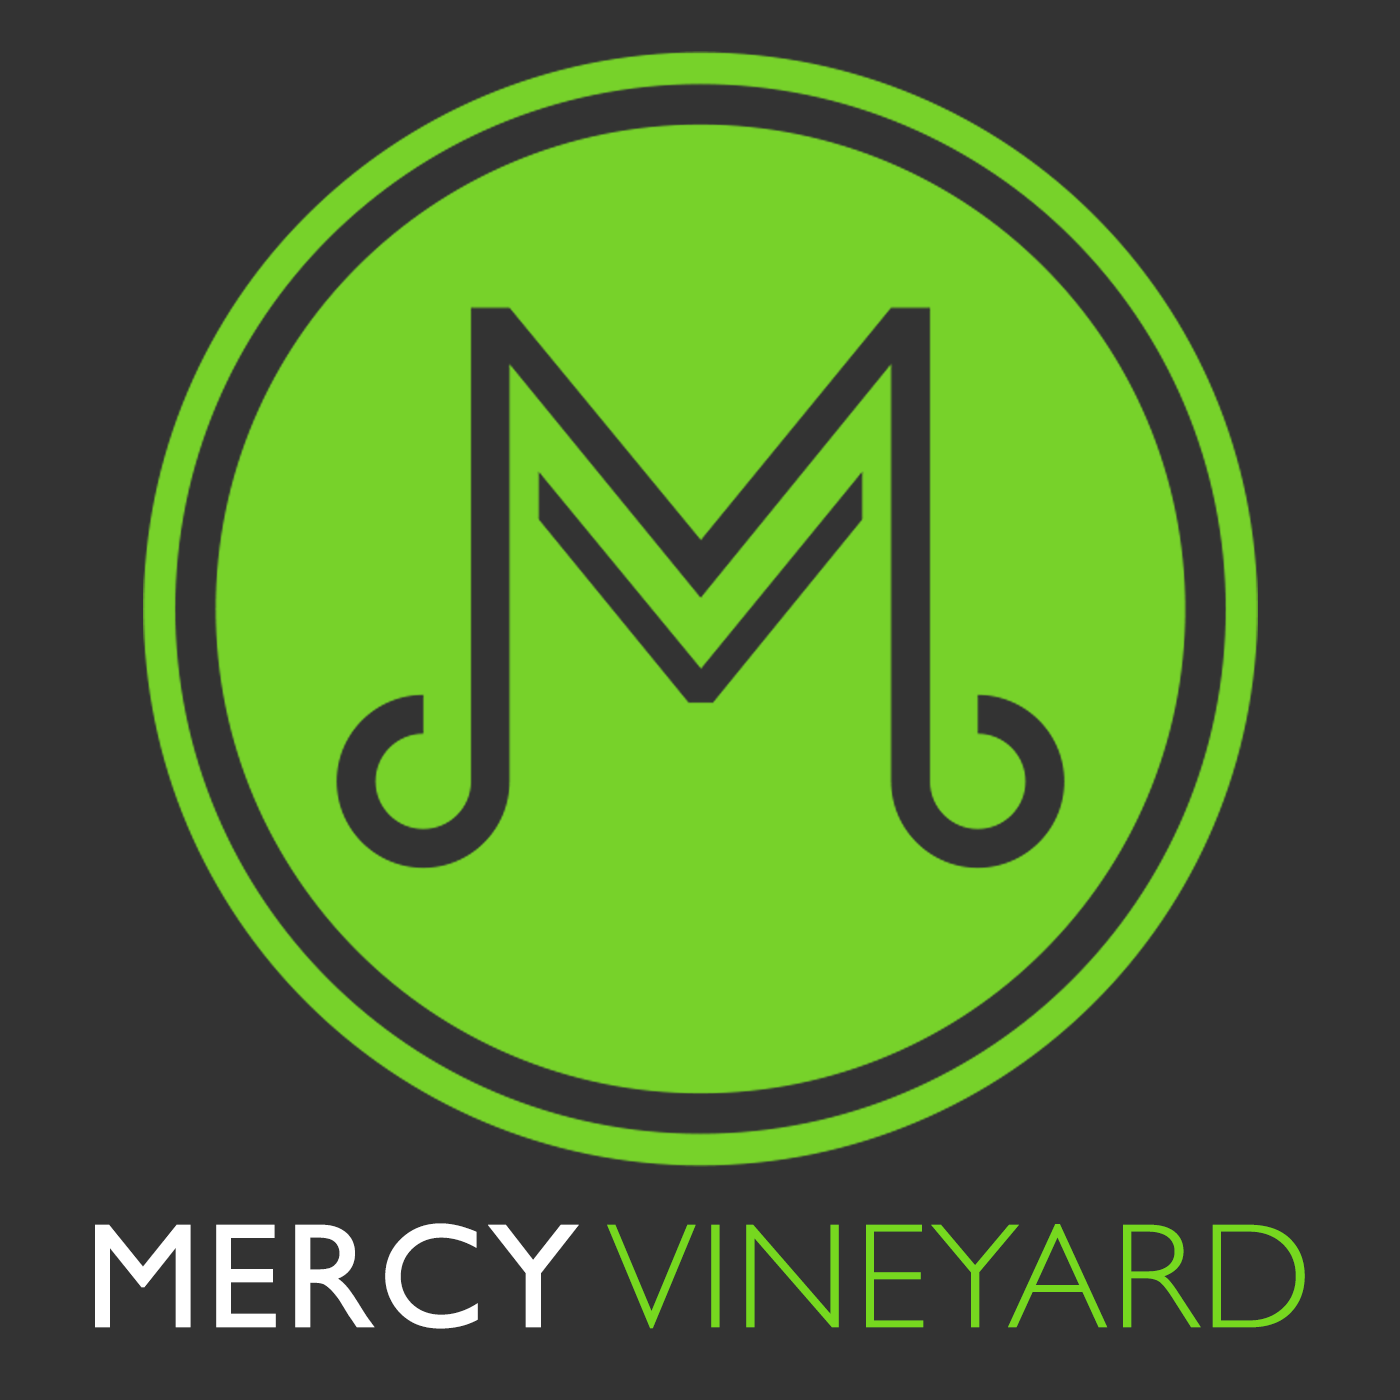 Mercy Vineyard Church